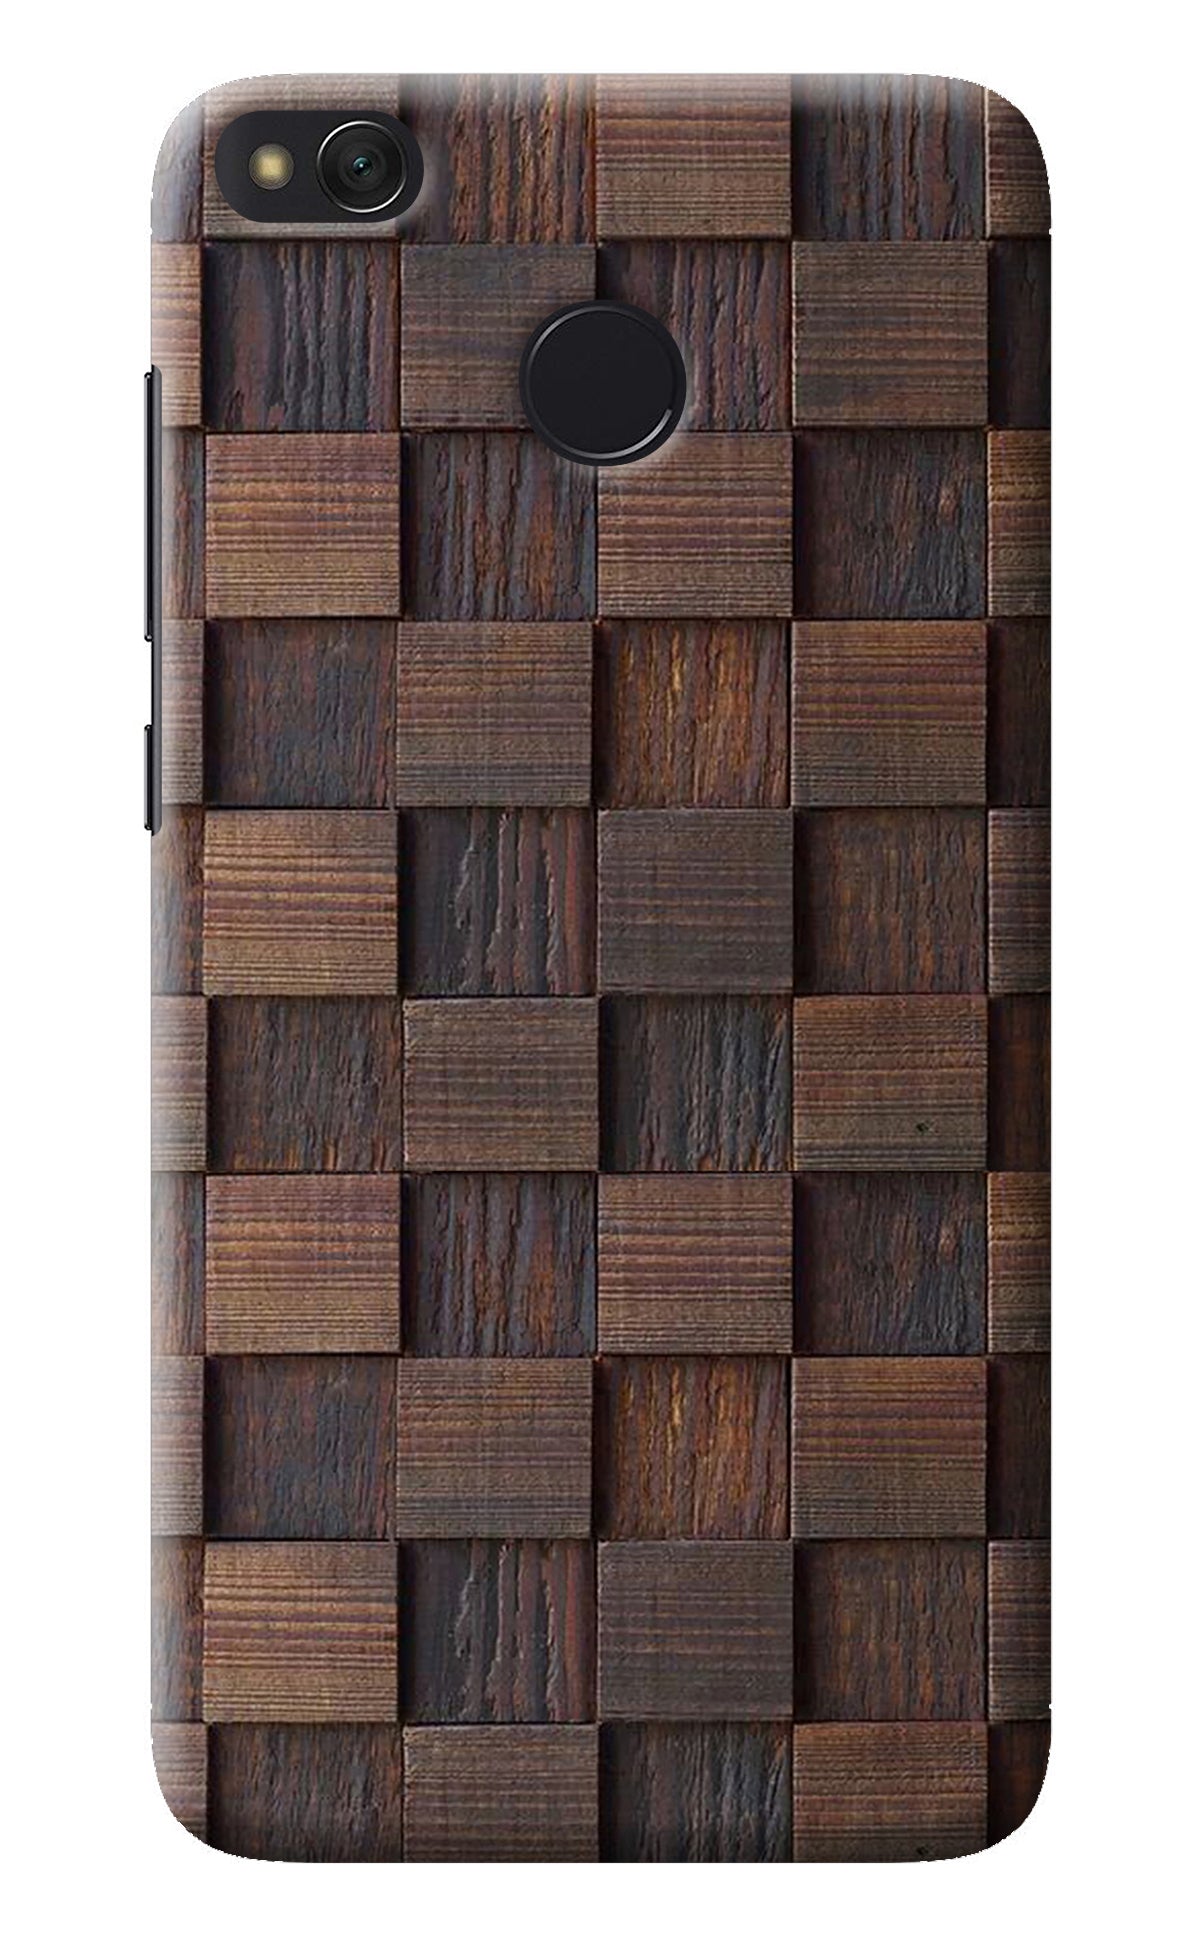 Wooden Cube Design Redmi 4 Back Cover